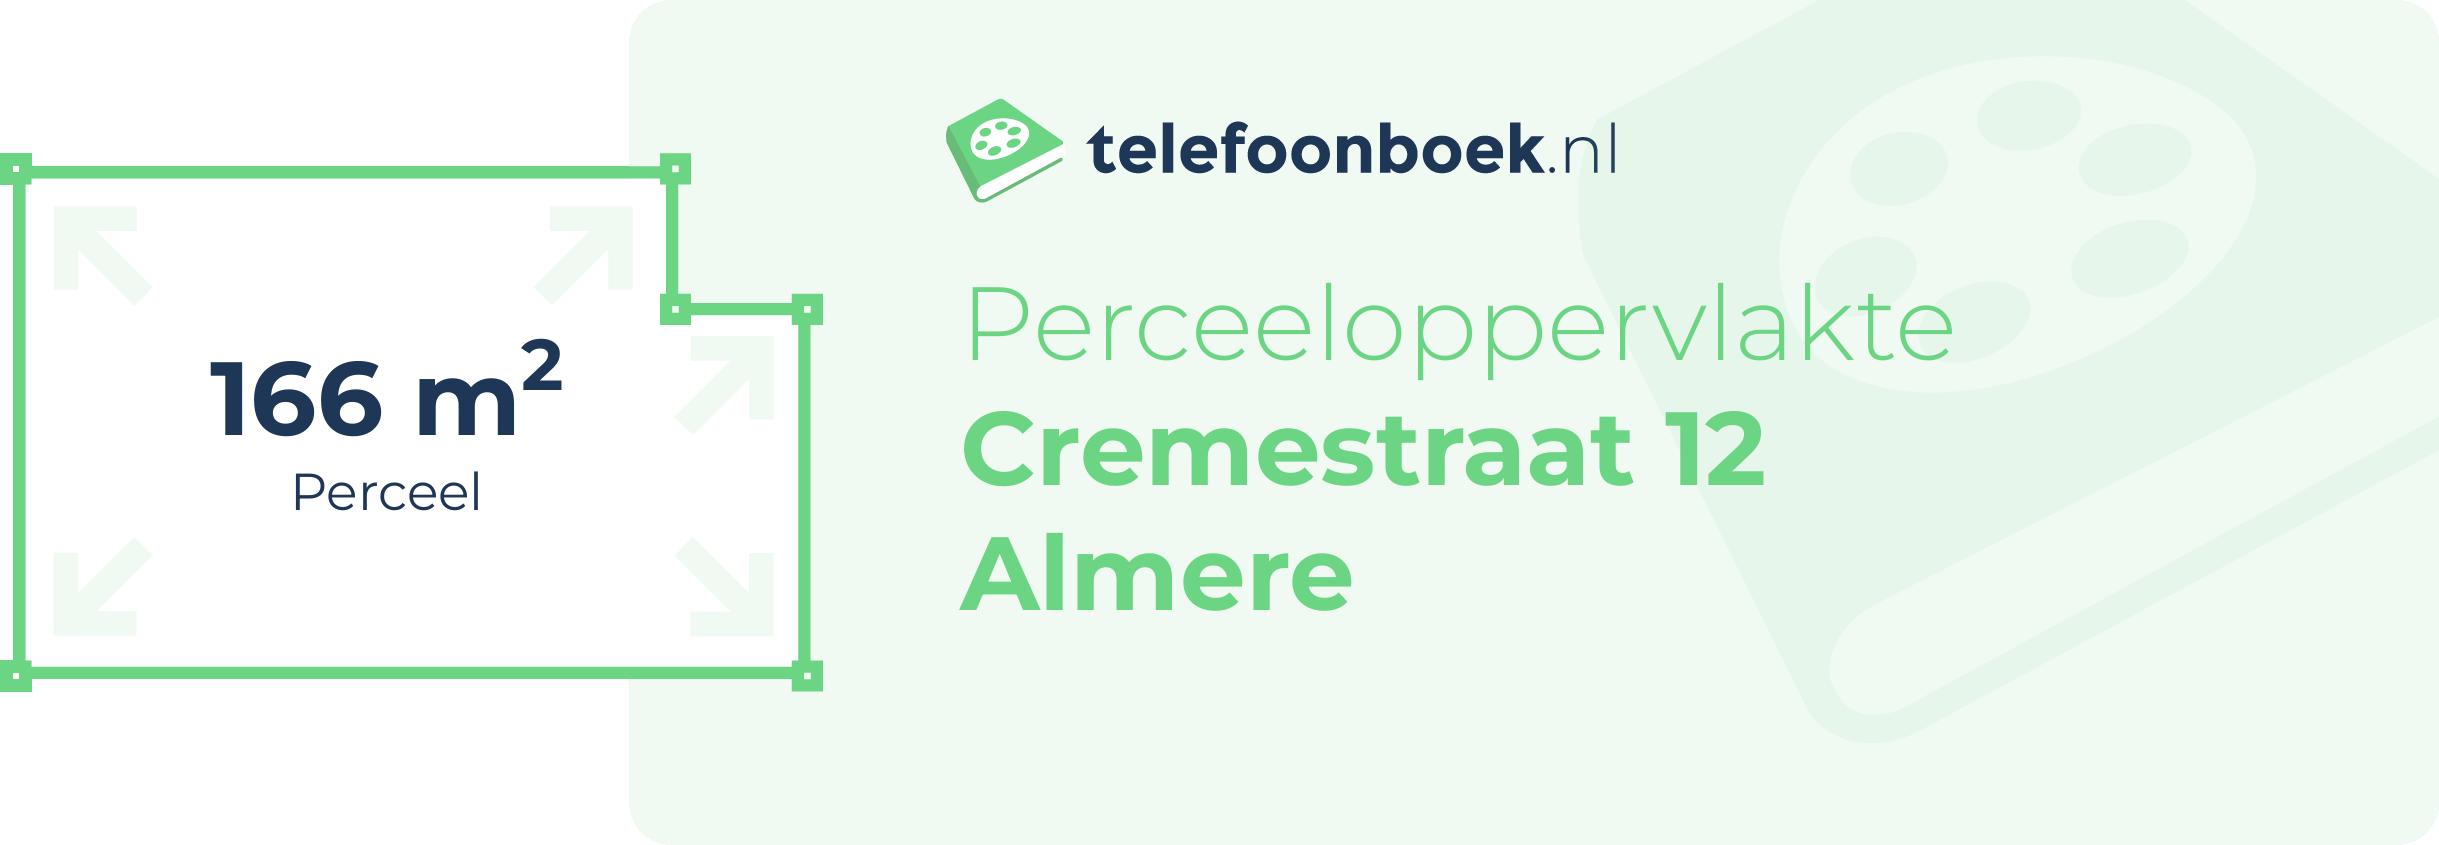 Perceeloppervlakte Cremestraat 12 Almere